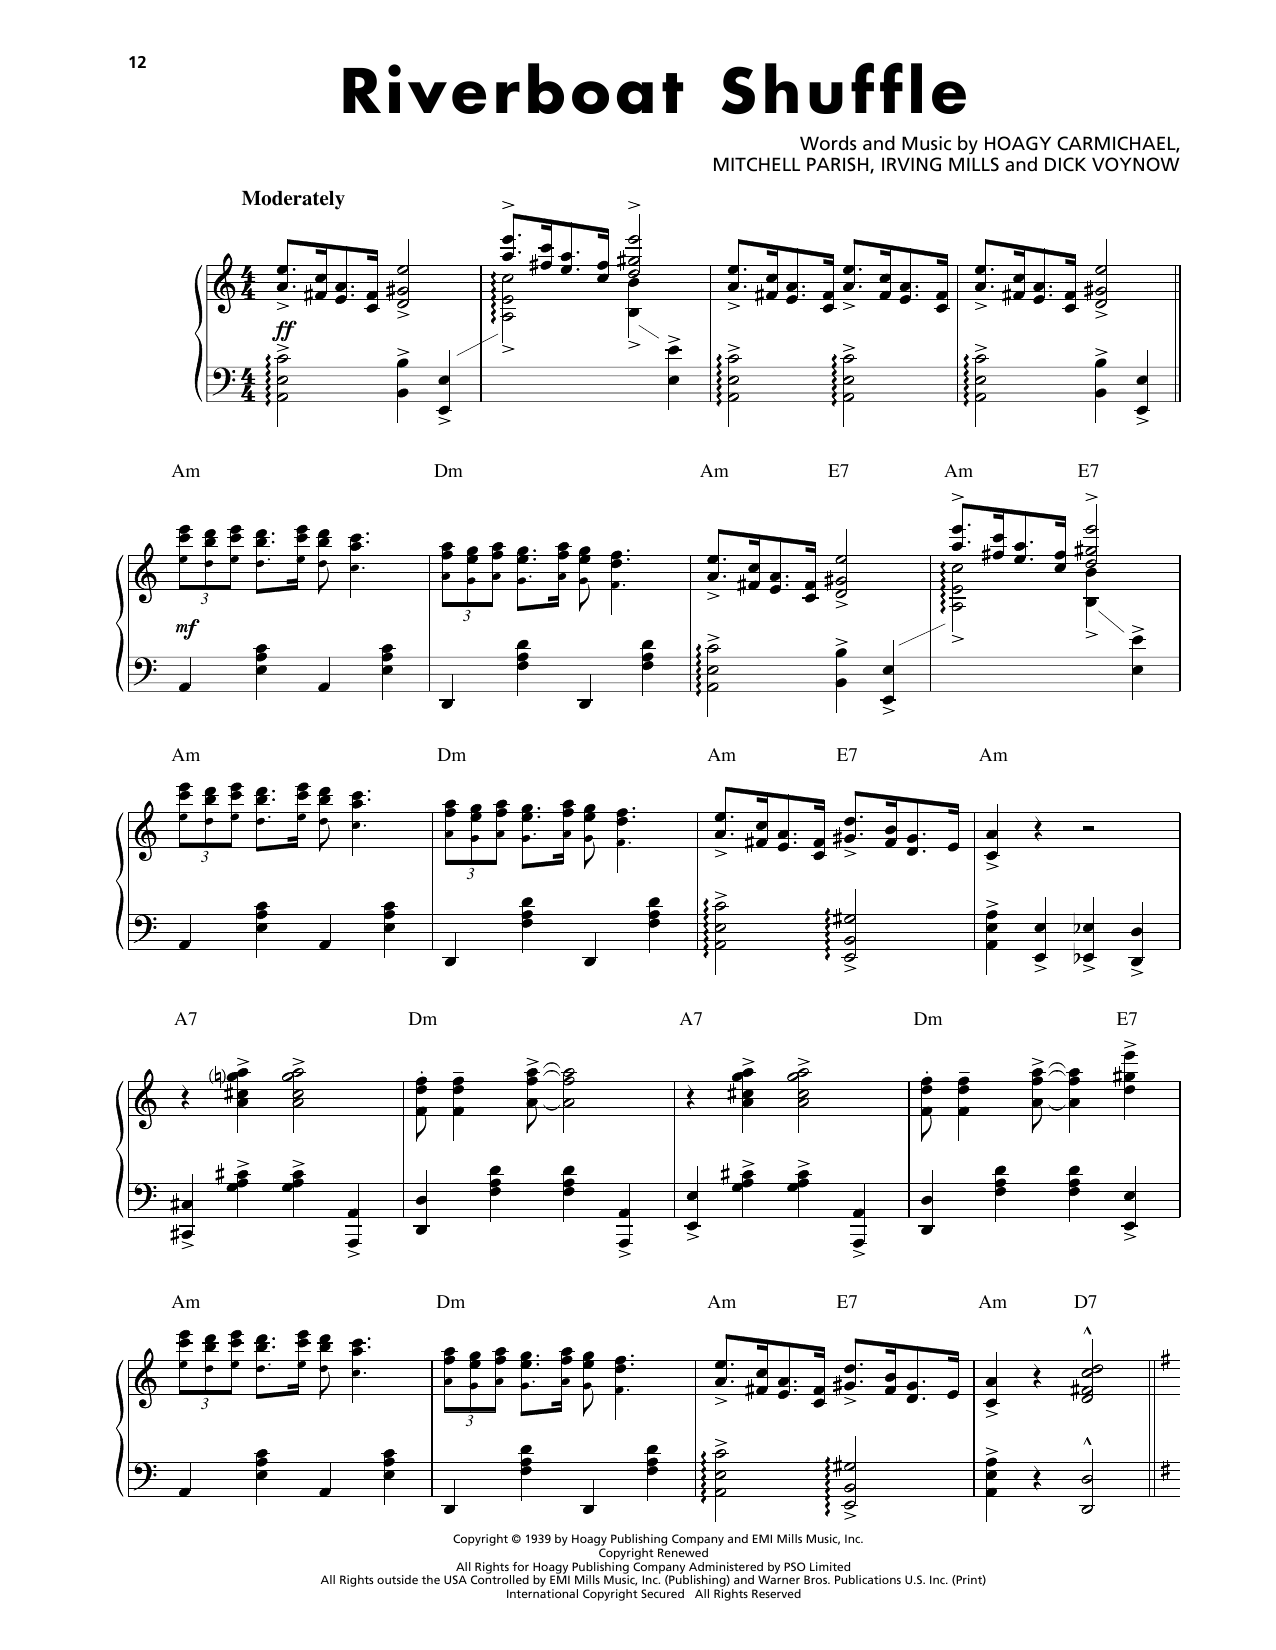 Bix Beiderbecke Riverboat Shuffle sheet music notes printable PDF score